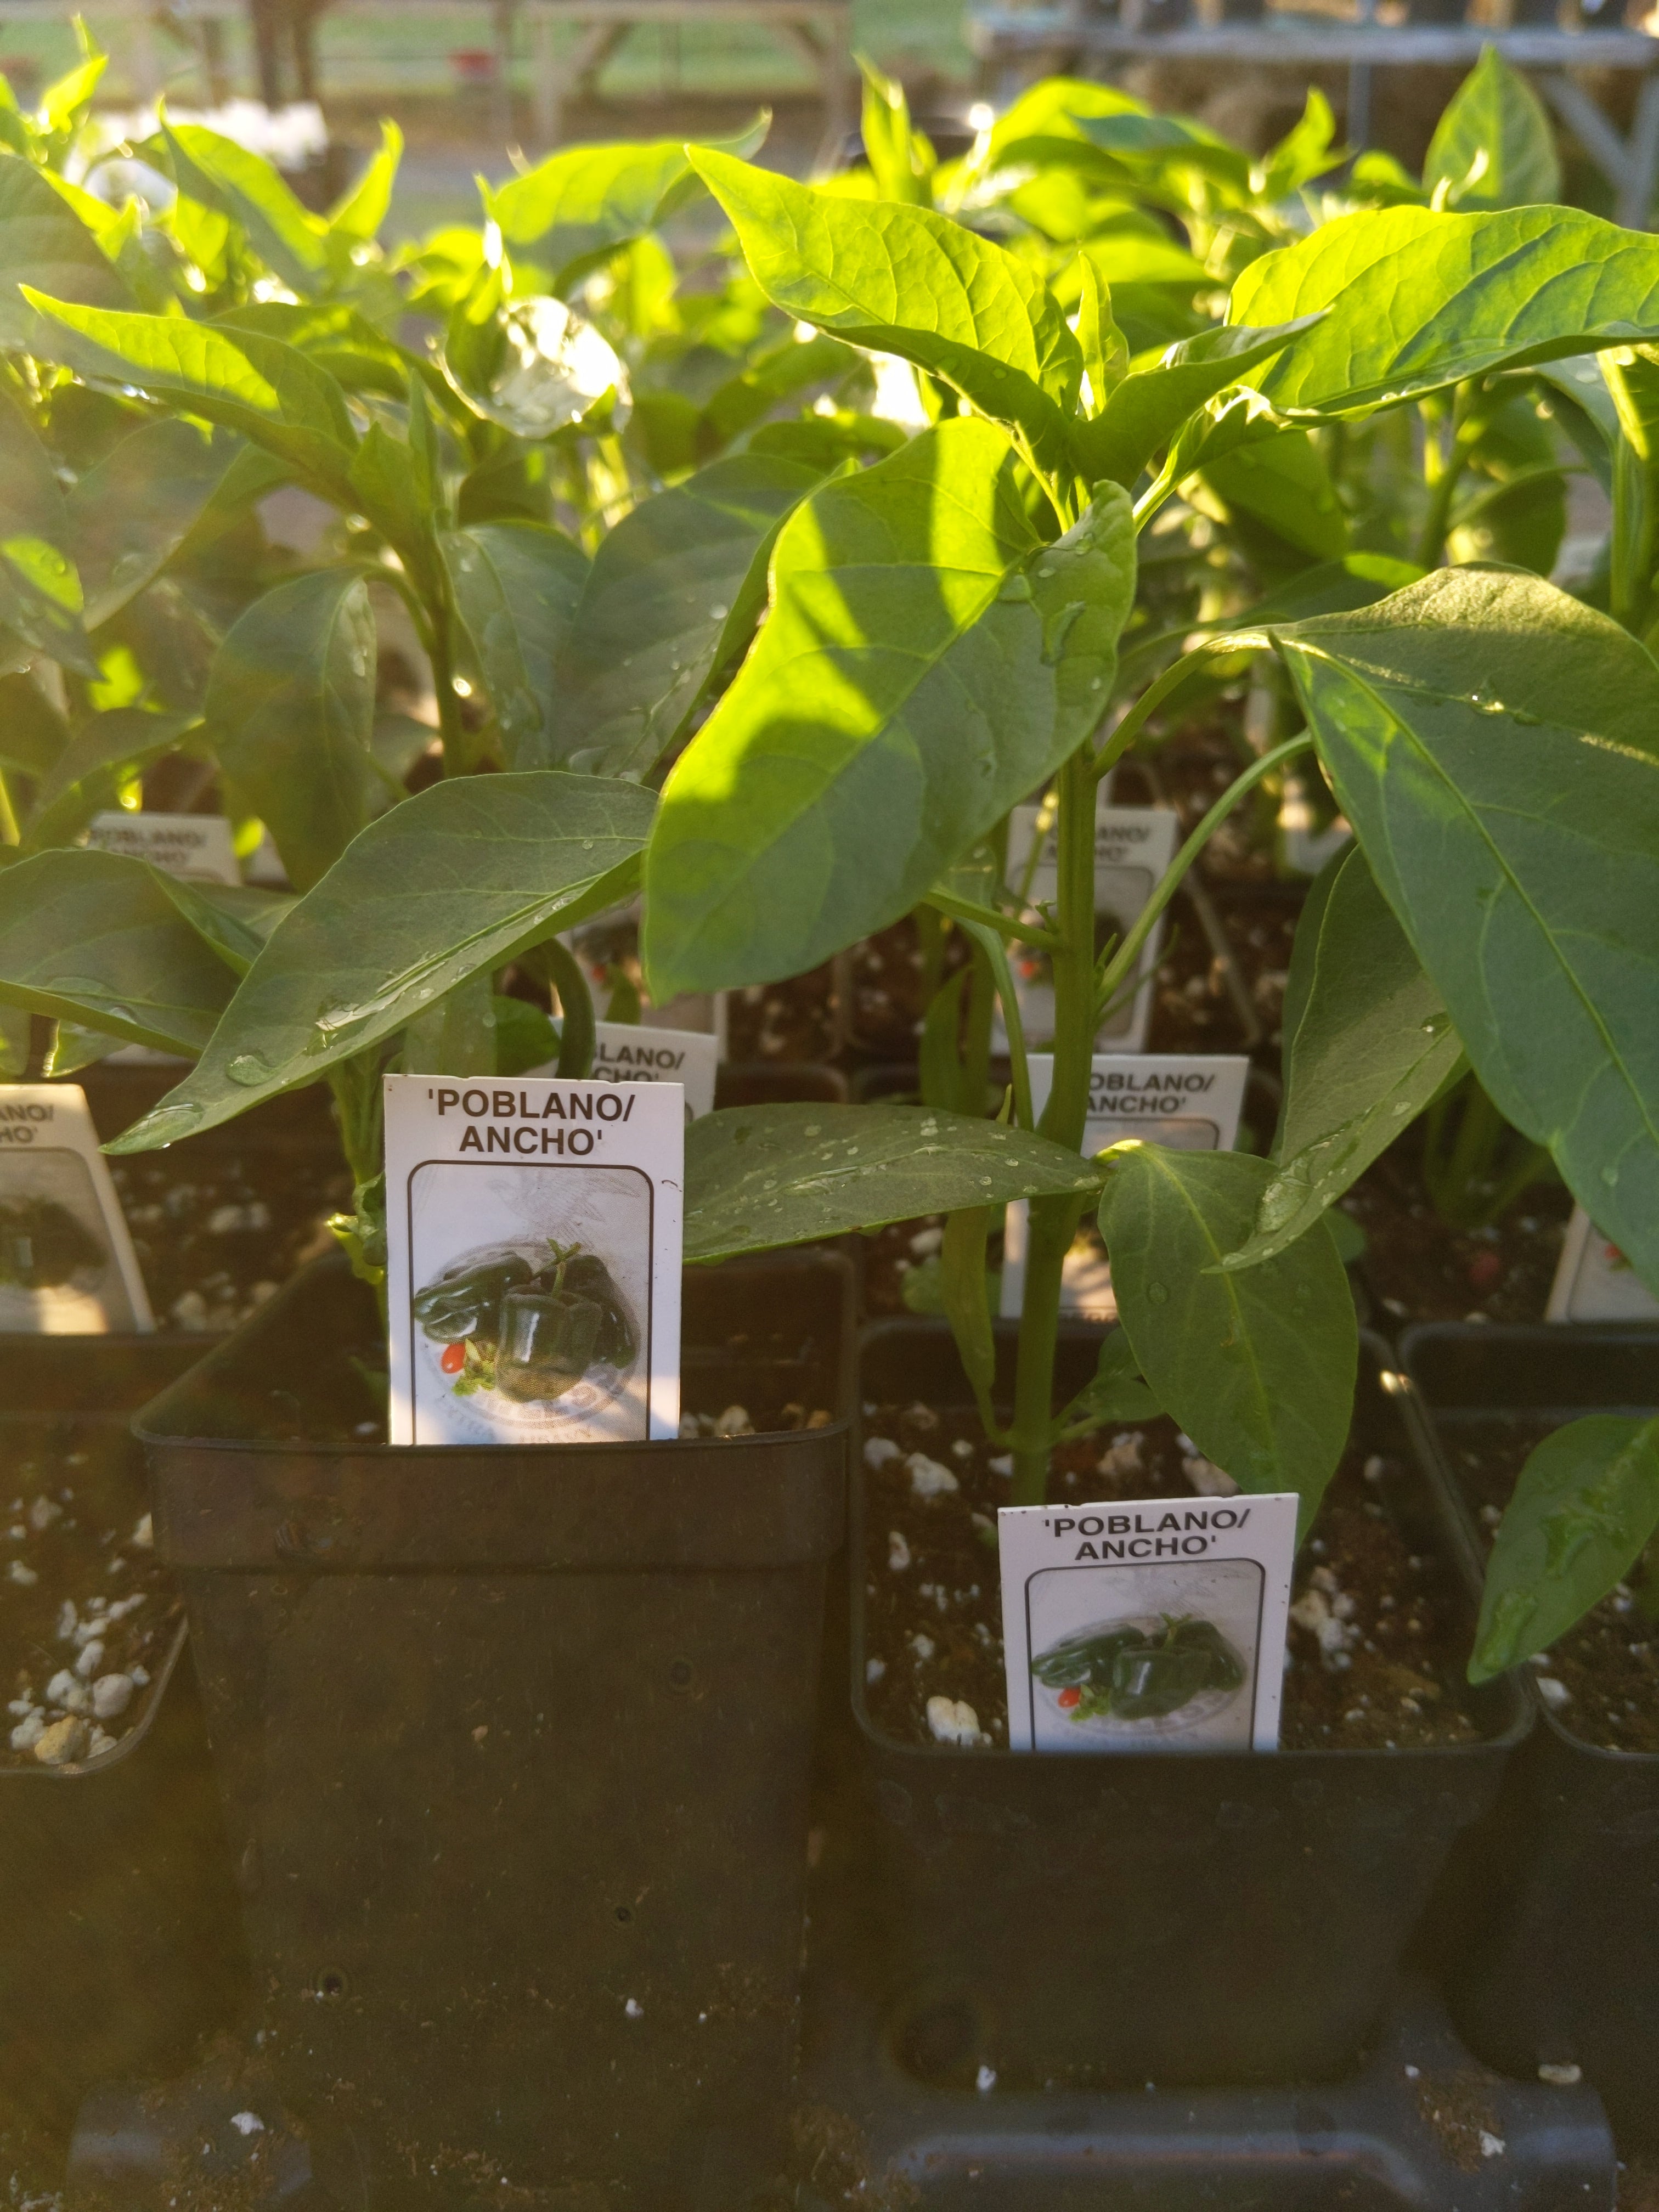 Poblano Ancho Hot Pepper Plant